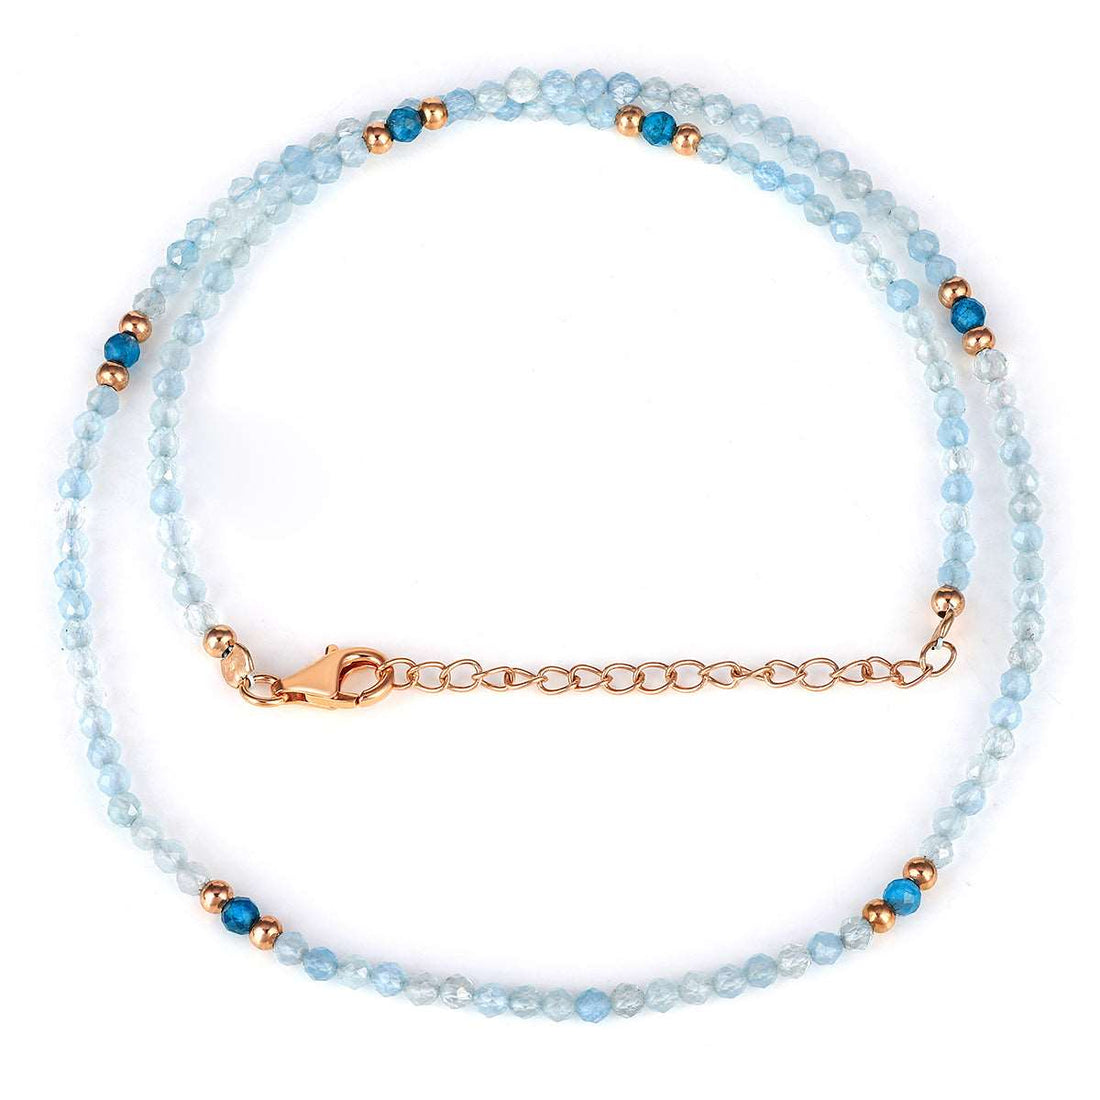 Aquamarine and Apatite Silver Necklace